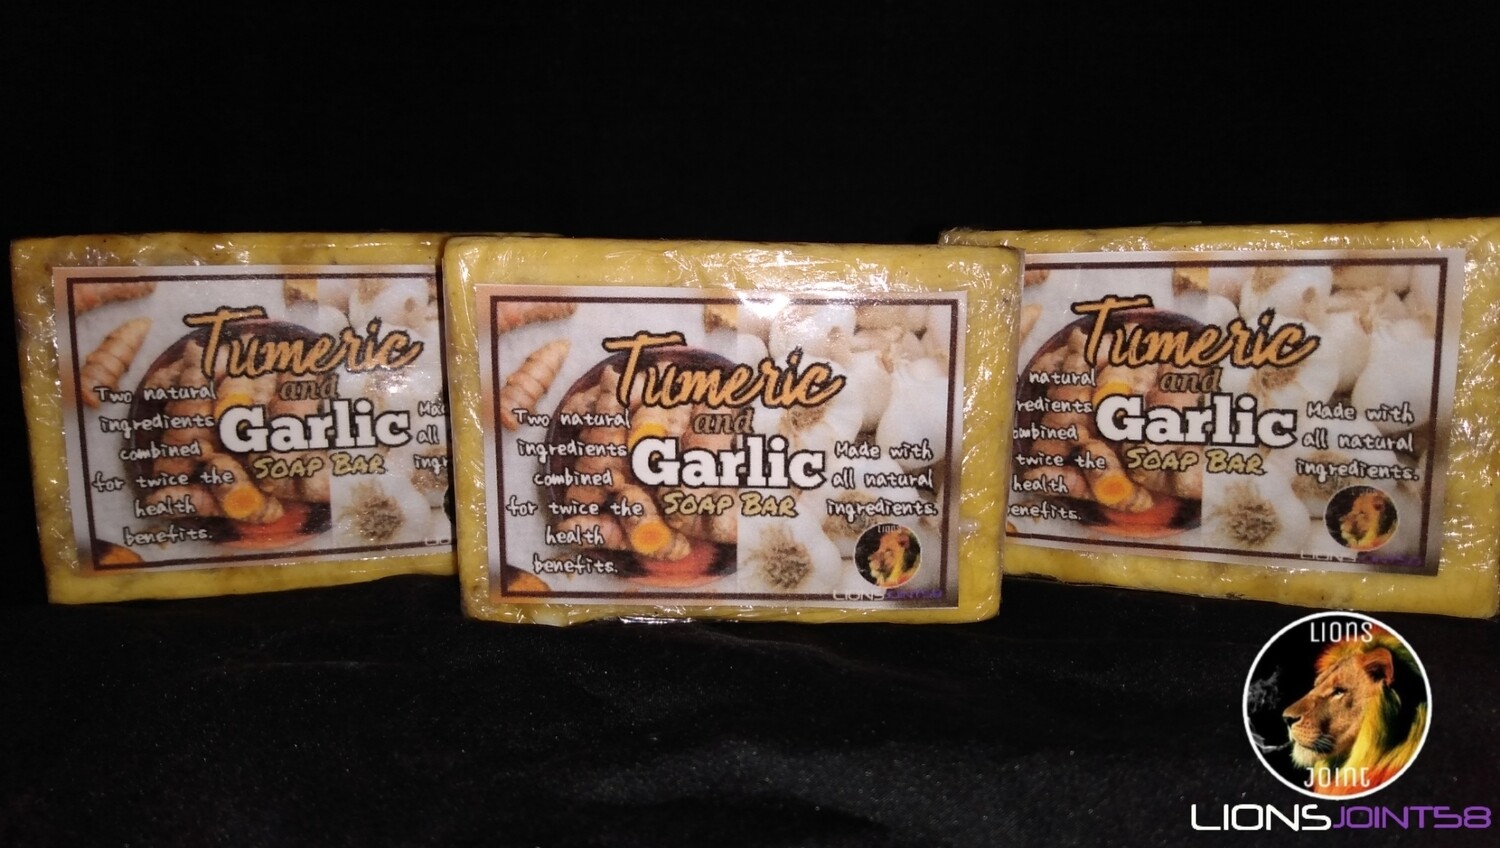 Tumeric and Garlic Soap Bar